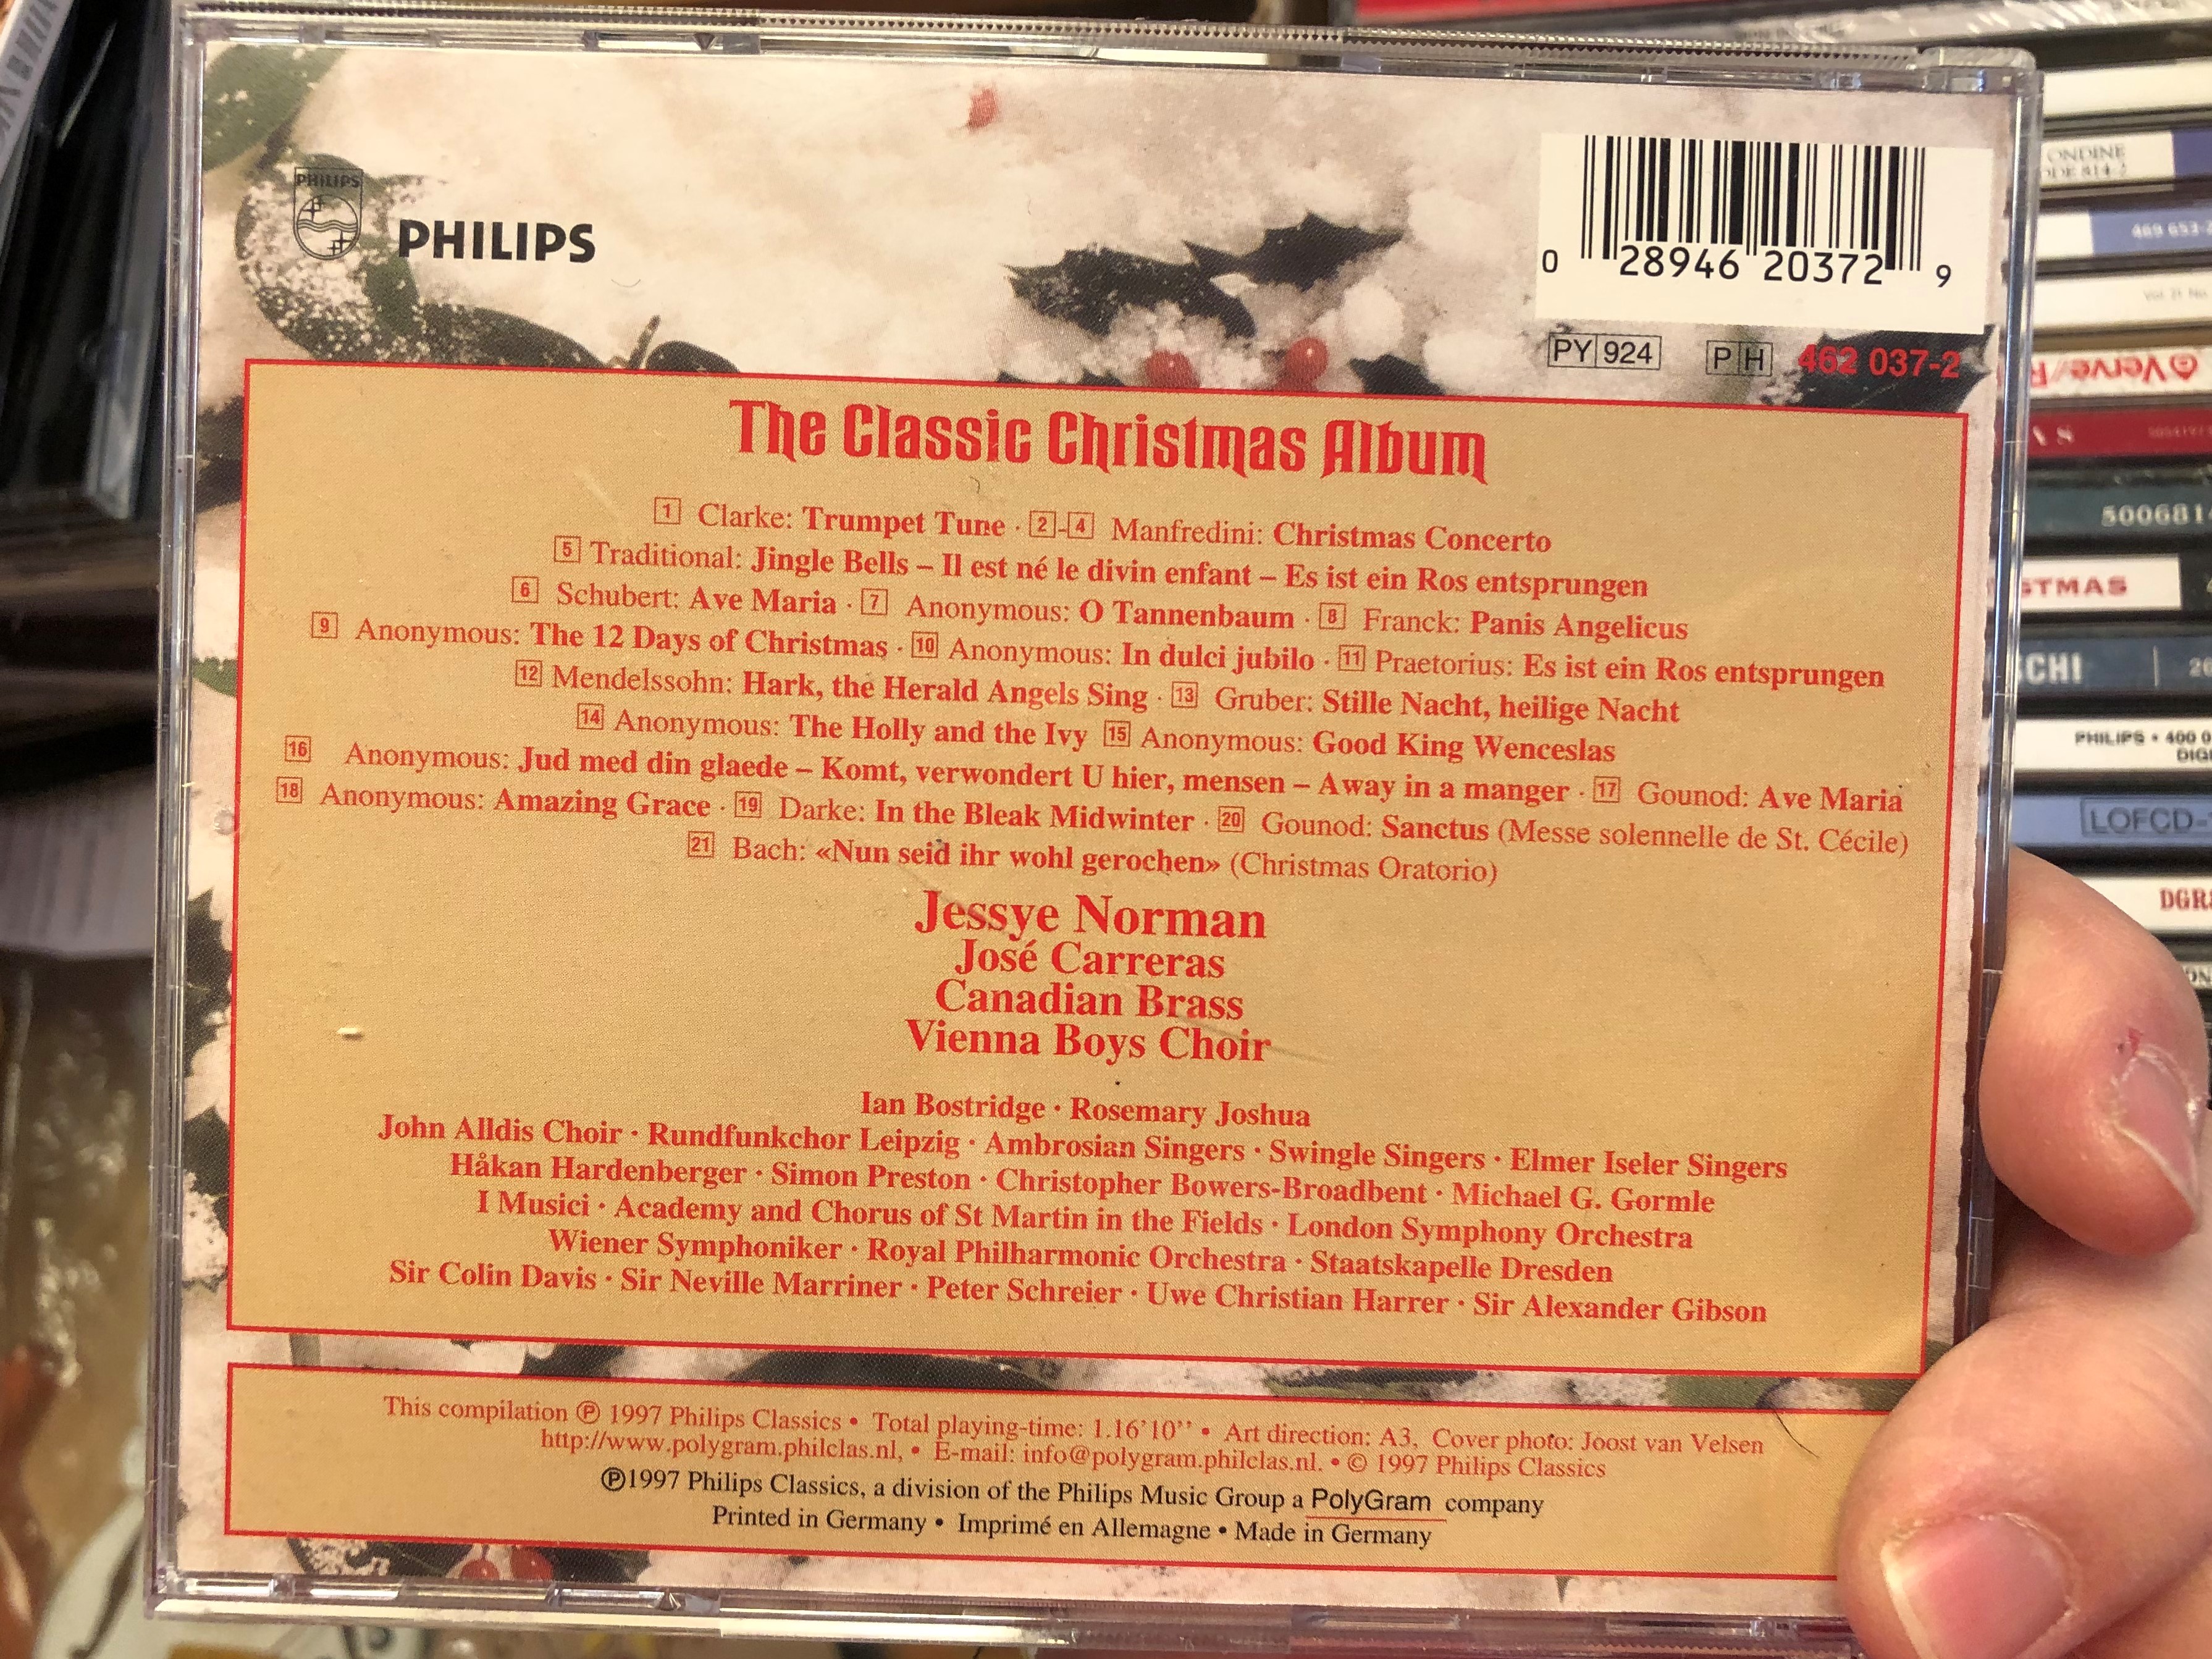 the-classic-christmas-album-jessye-norman-jose-carreras-canadian-brass-vienna-boys-choir-philips-audio-cd-1997-462-037-2-2-.jpg